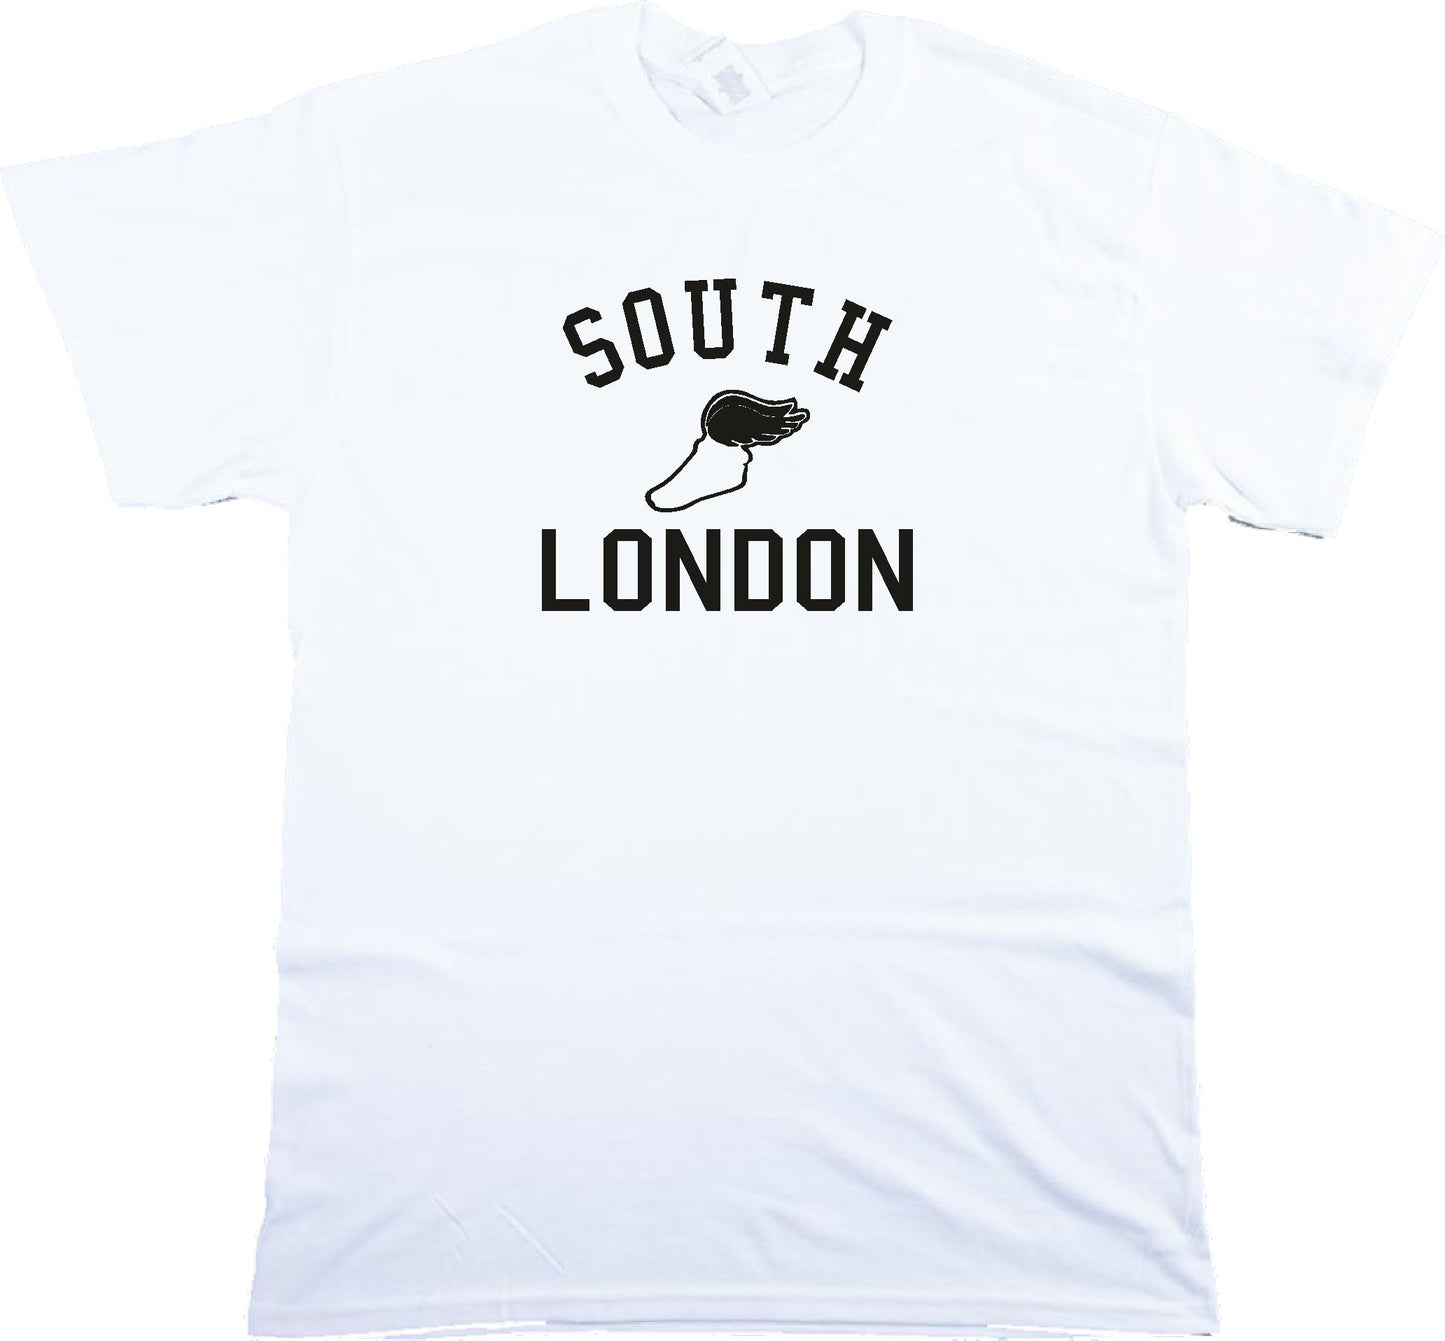 South London Retro Track T-Shirt - Running, College, Souvenir, Various Colours